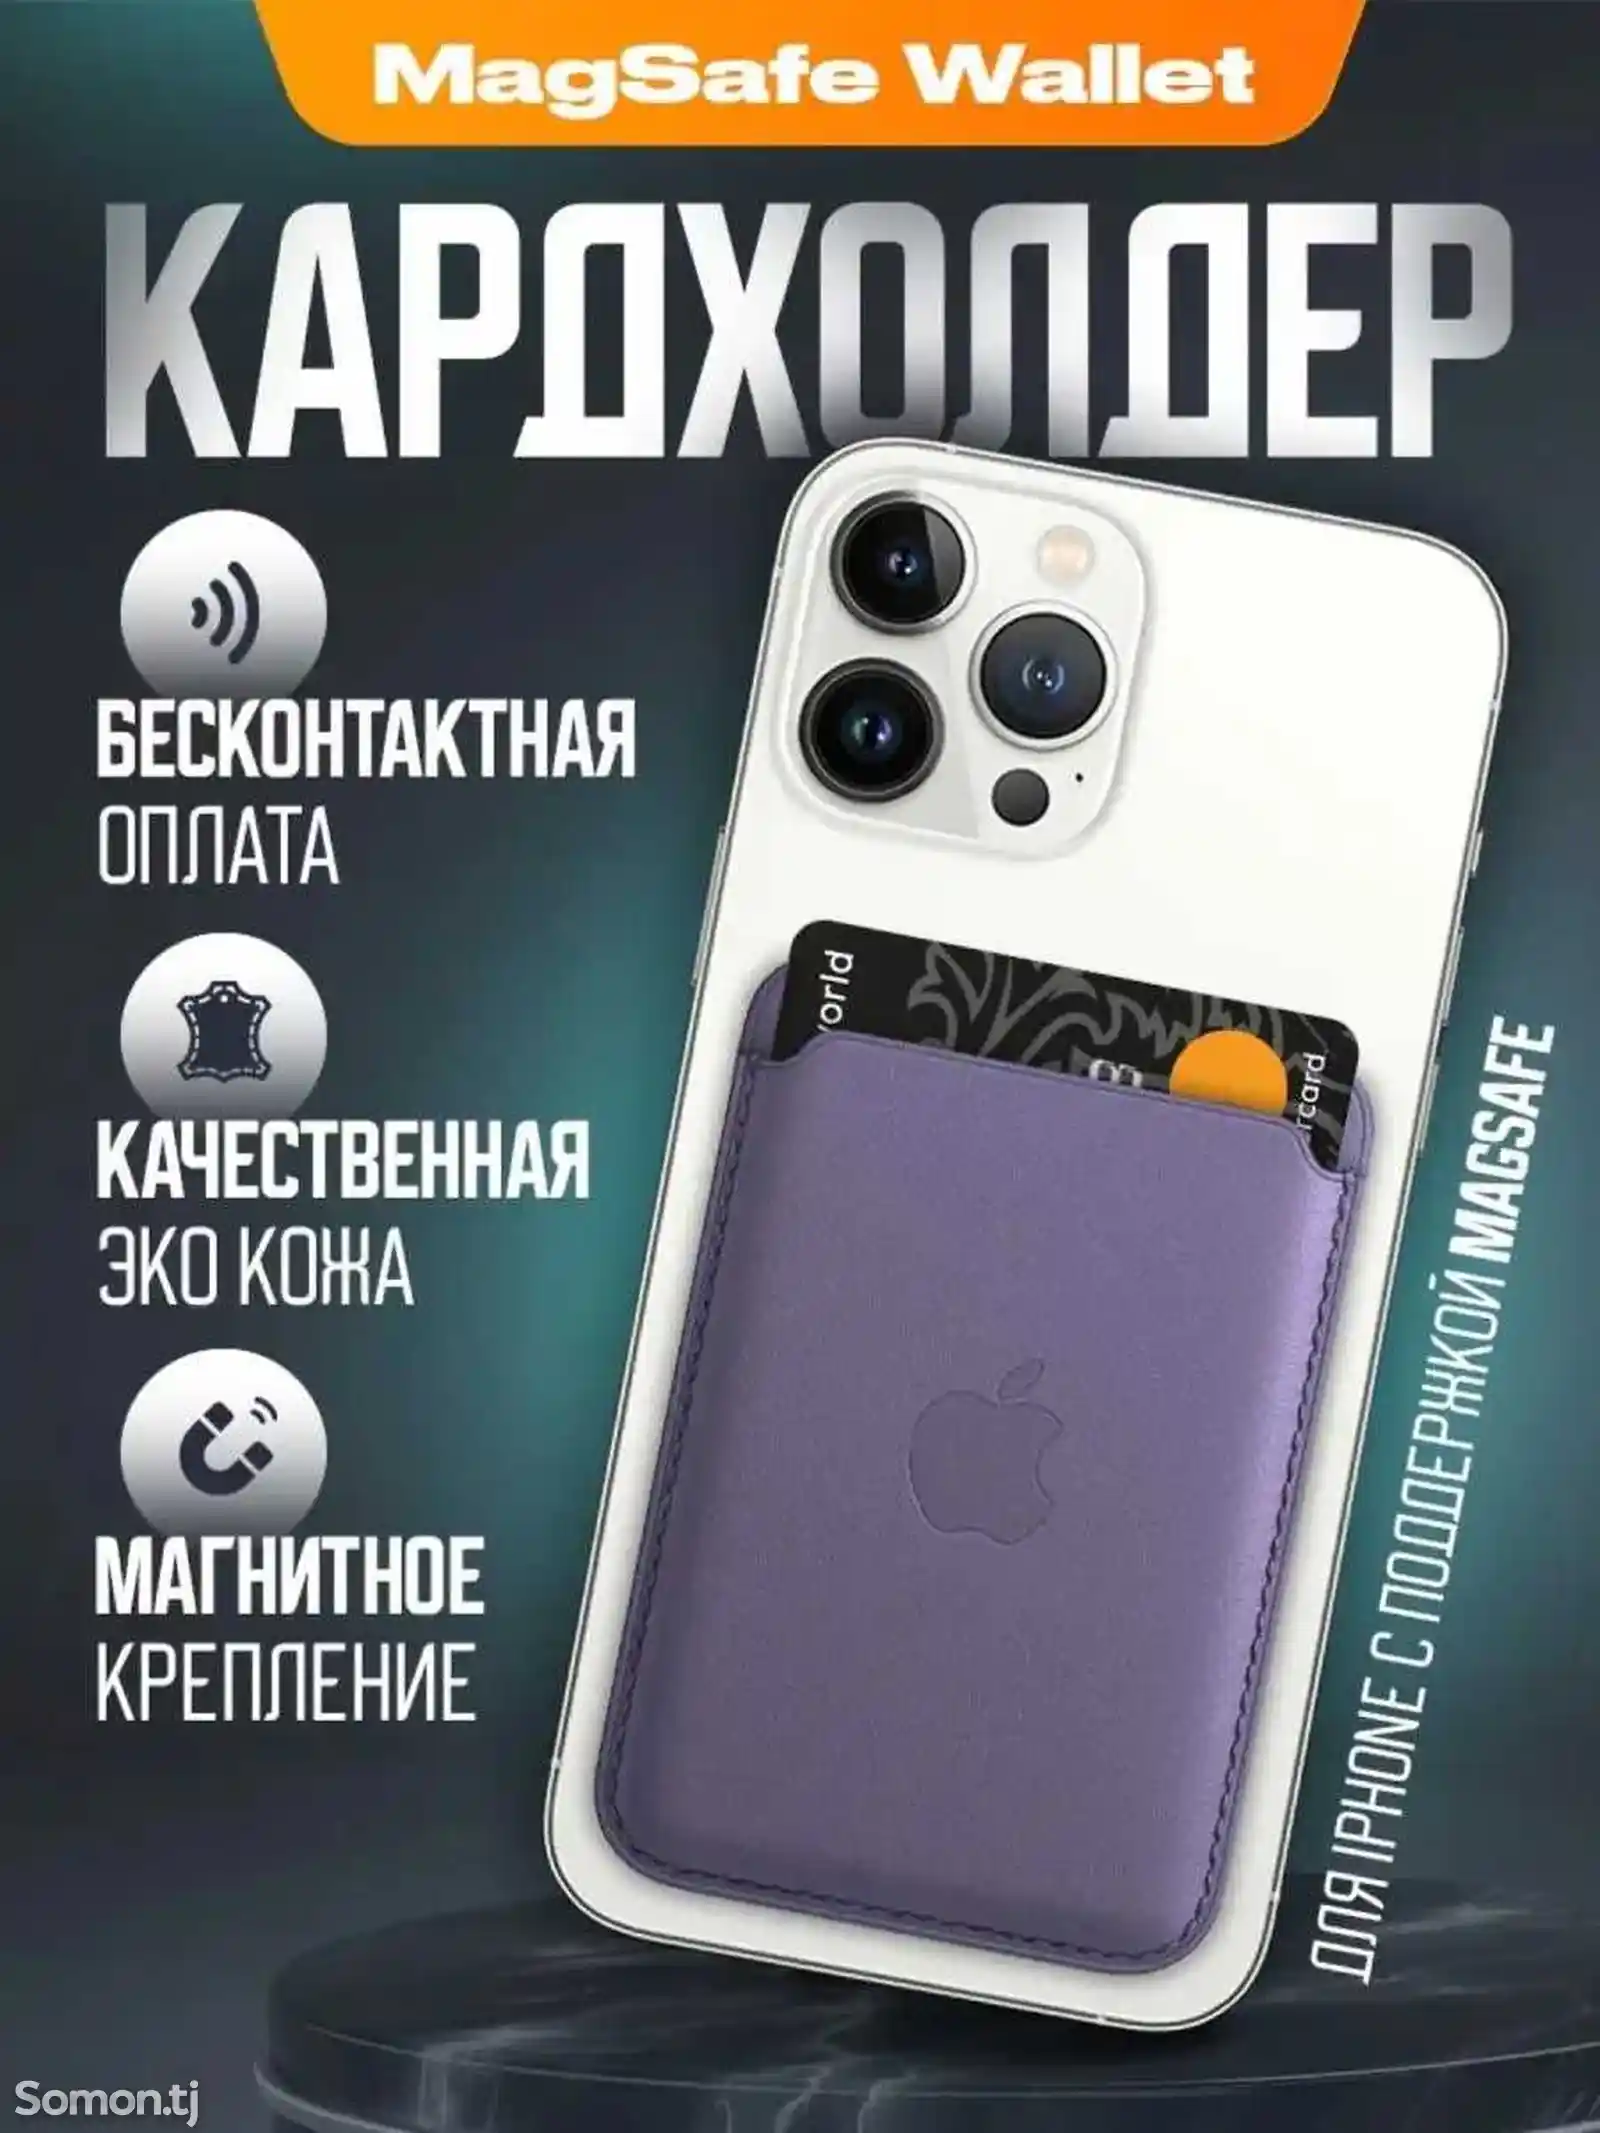 Картхолдер на iPhone Wallet MagSafe на заказ-4